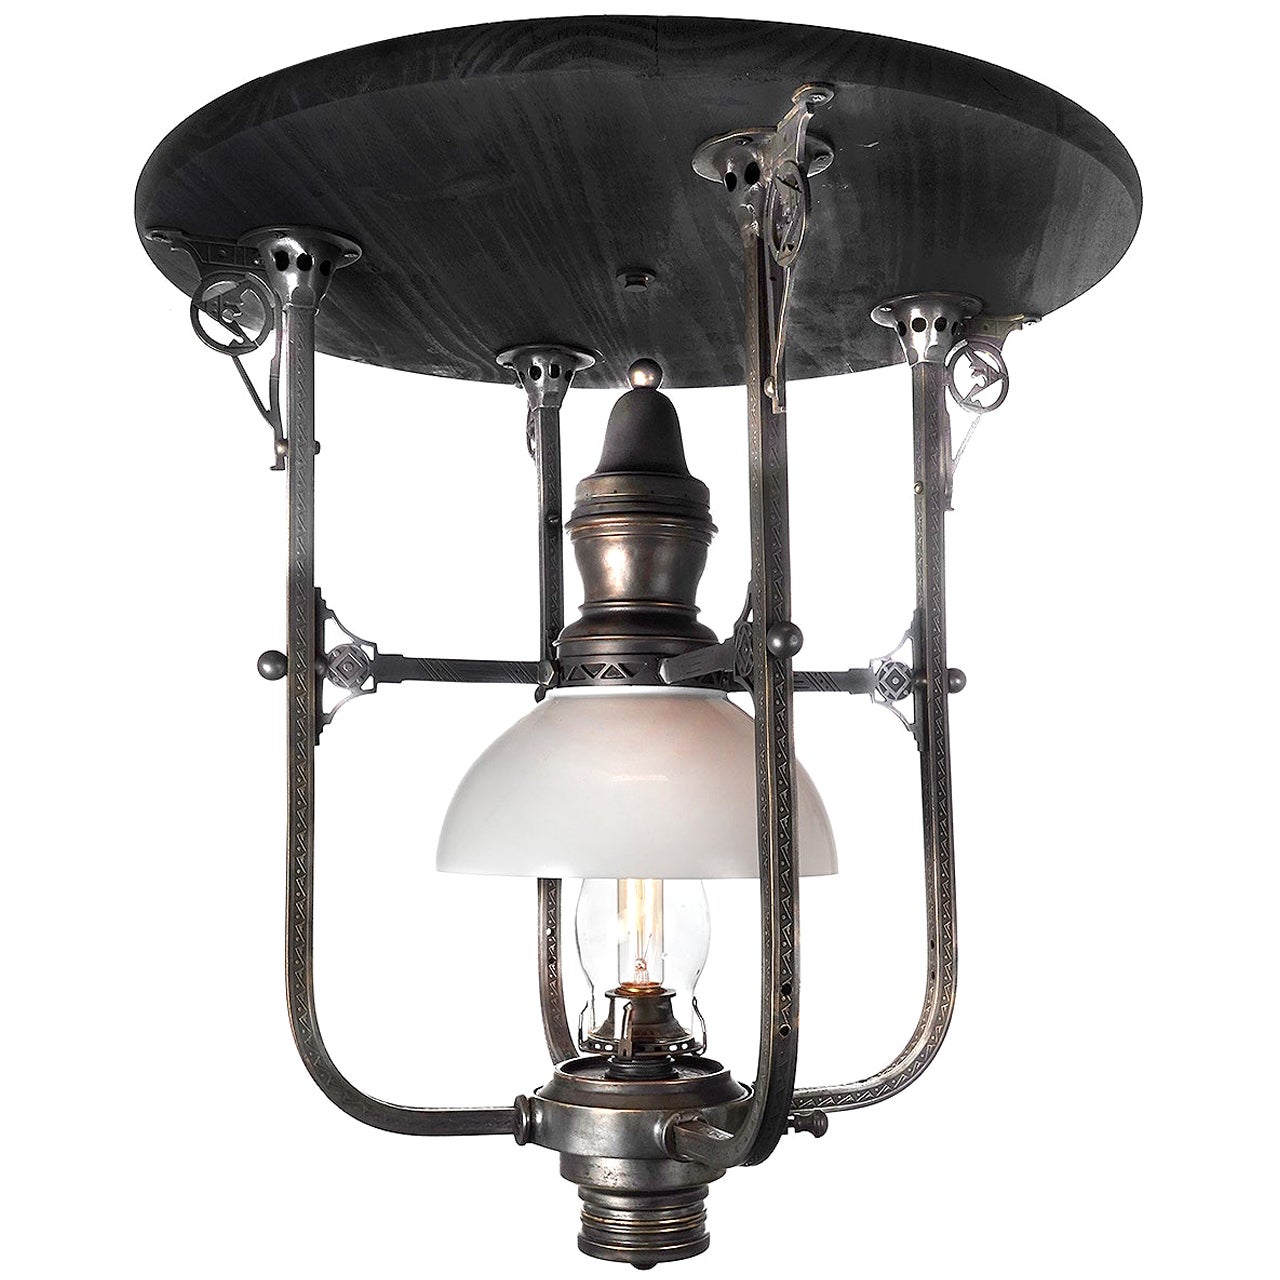 Very Rare 1800s Railroad Dining Car Center Lamp